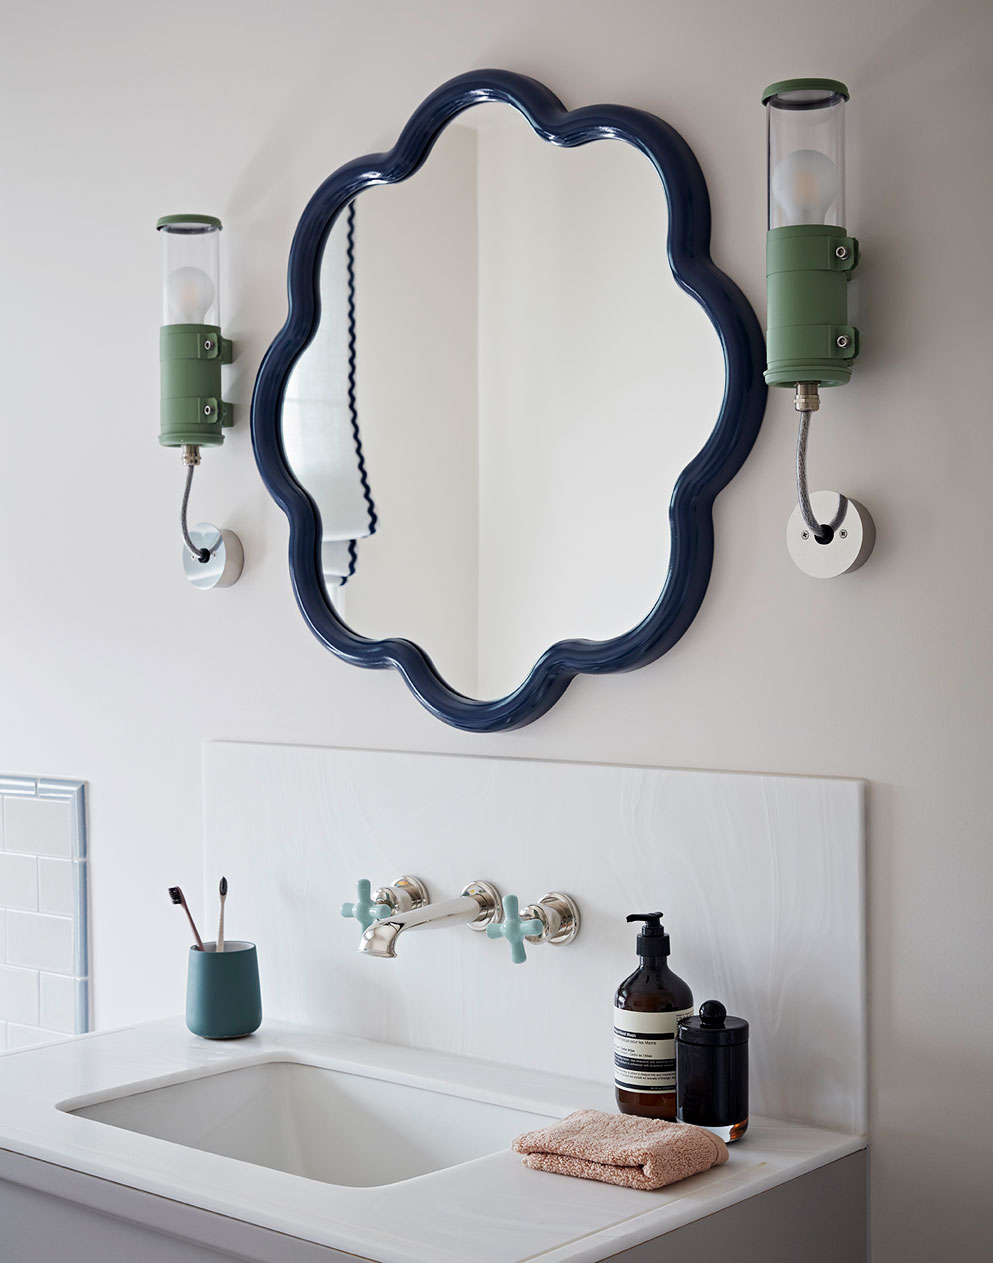 Flower-shaped bathroom mirror and unusual lights above a bathroom sink